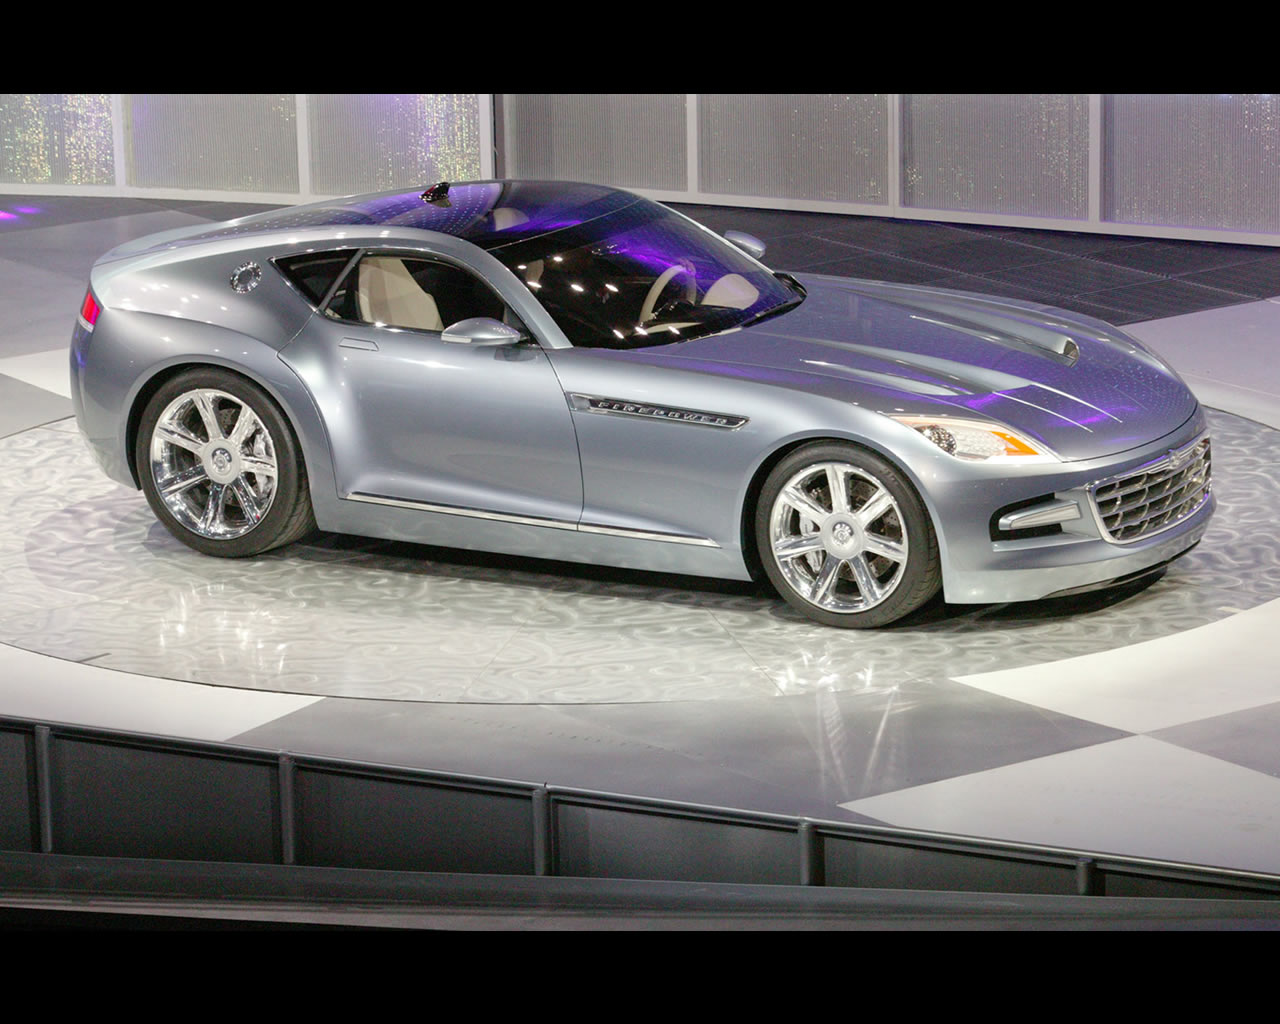 Chrysler concept sports car #2